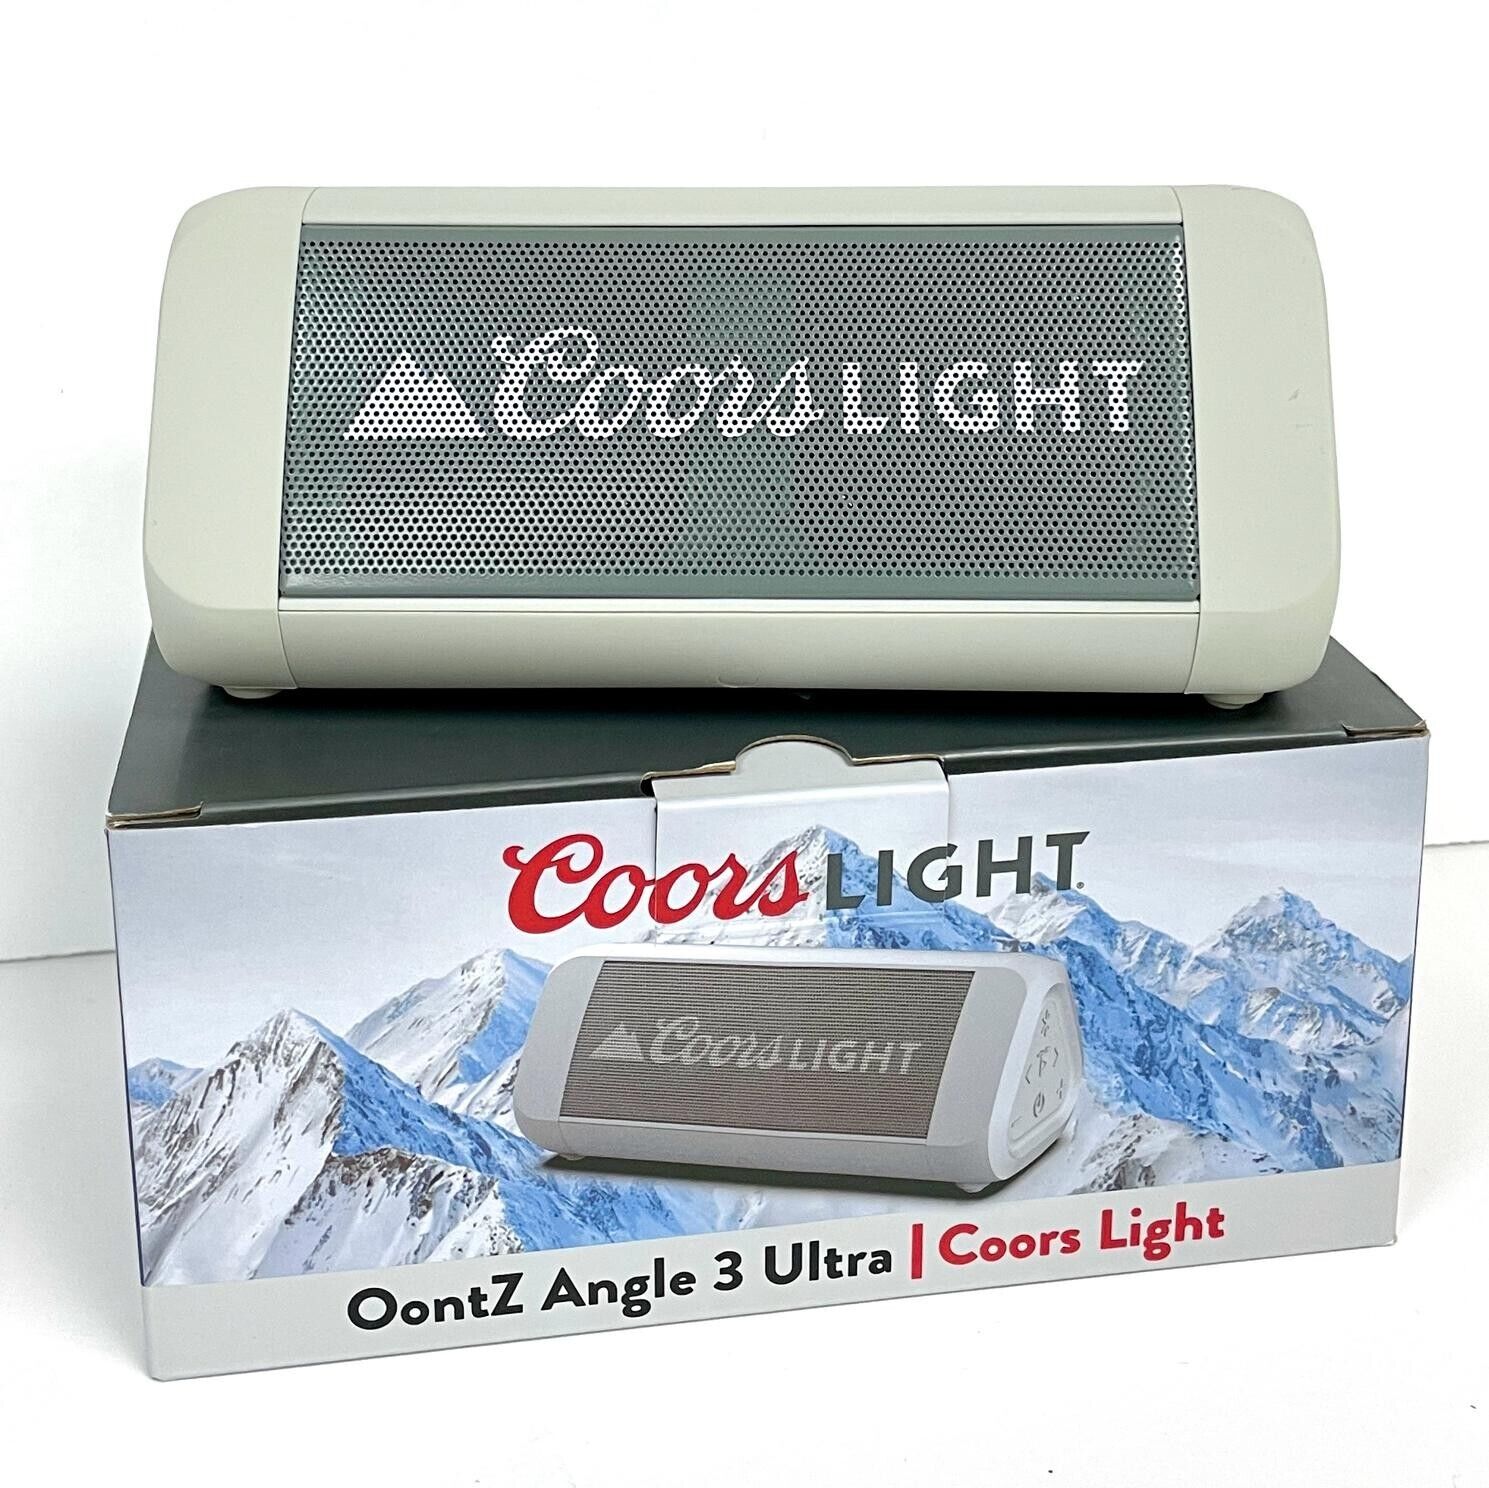 (Open Box) Oontz Angle 3 Ultra Portable Wireless Bluetooth Speaker - Coors Light